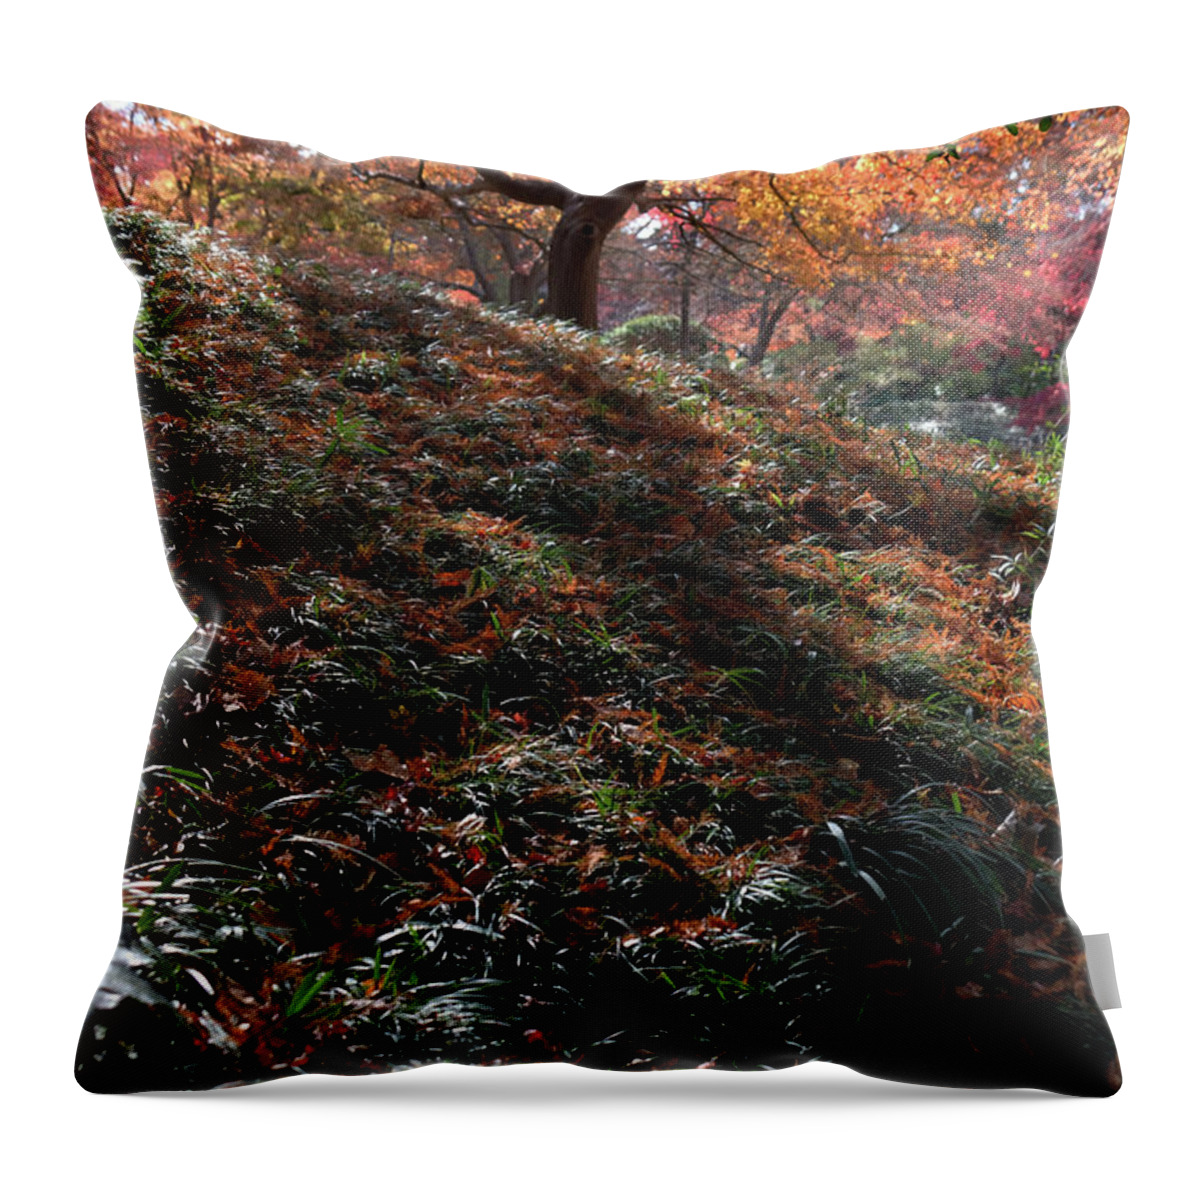 Autumn Throw Pillow featuring the photograph Slippery Slope by Ricardo J Ruiz de Porras